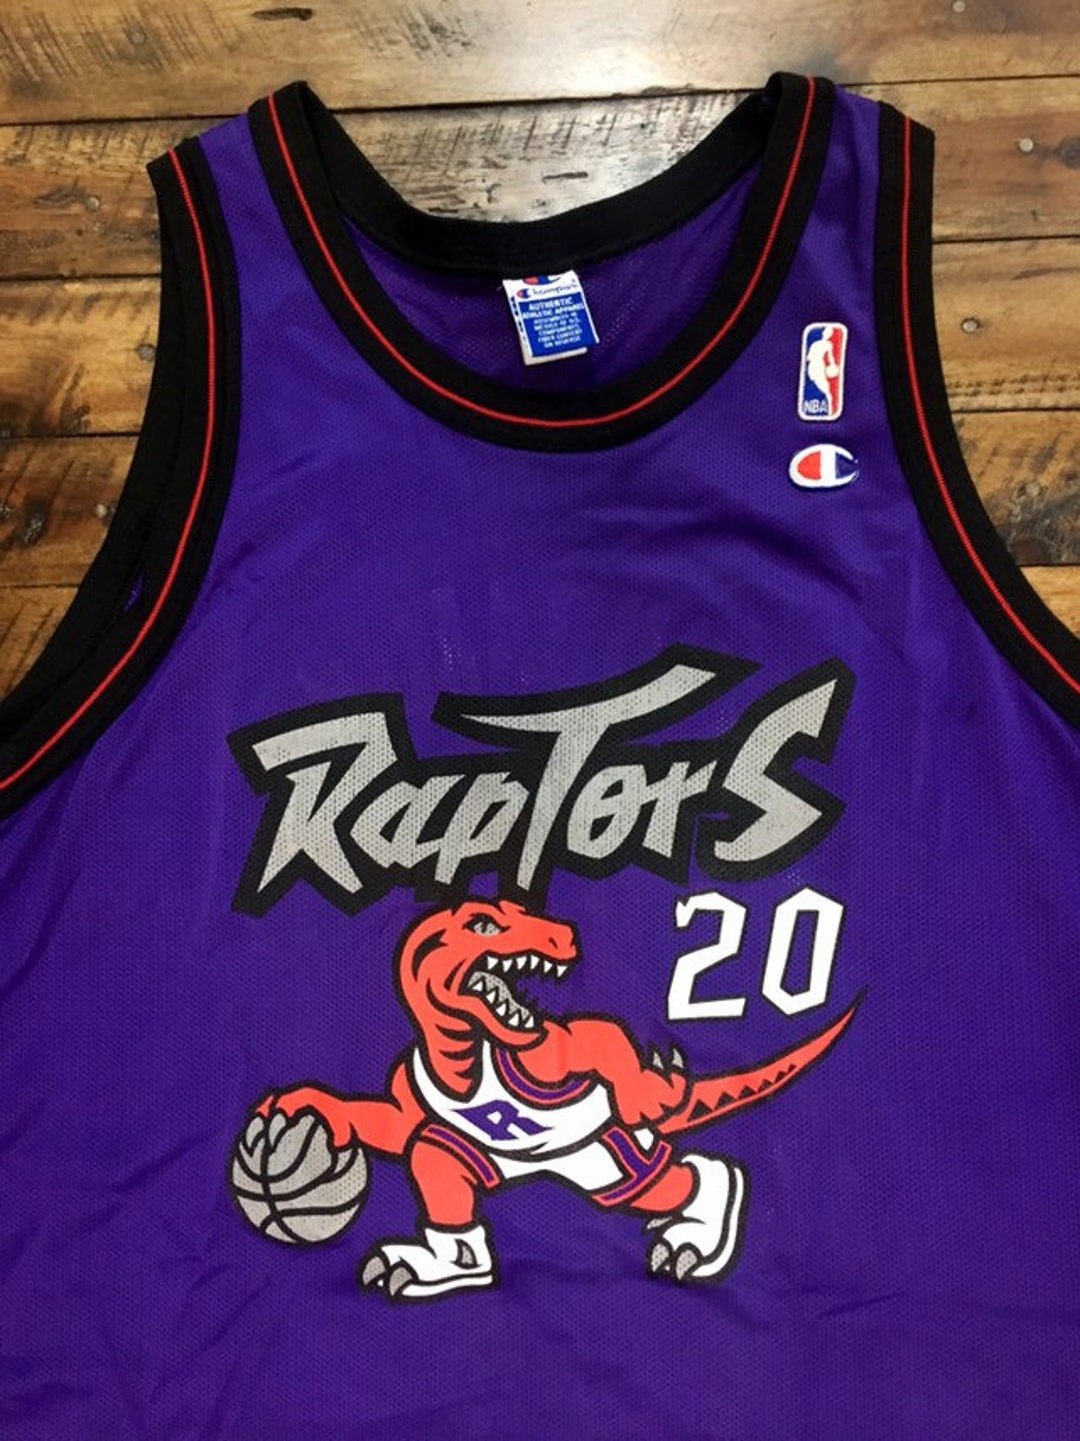 Raptors 90s jerseys